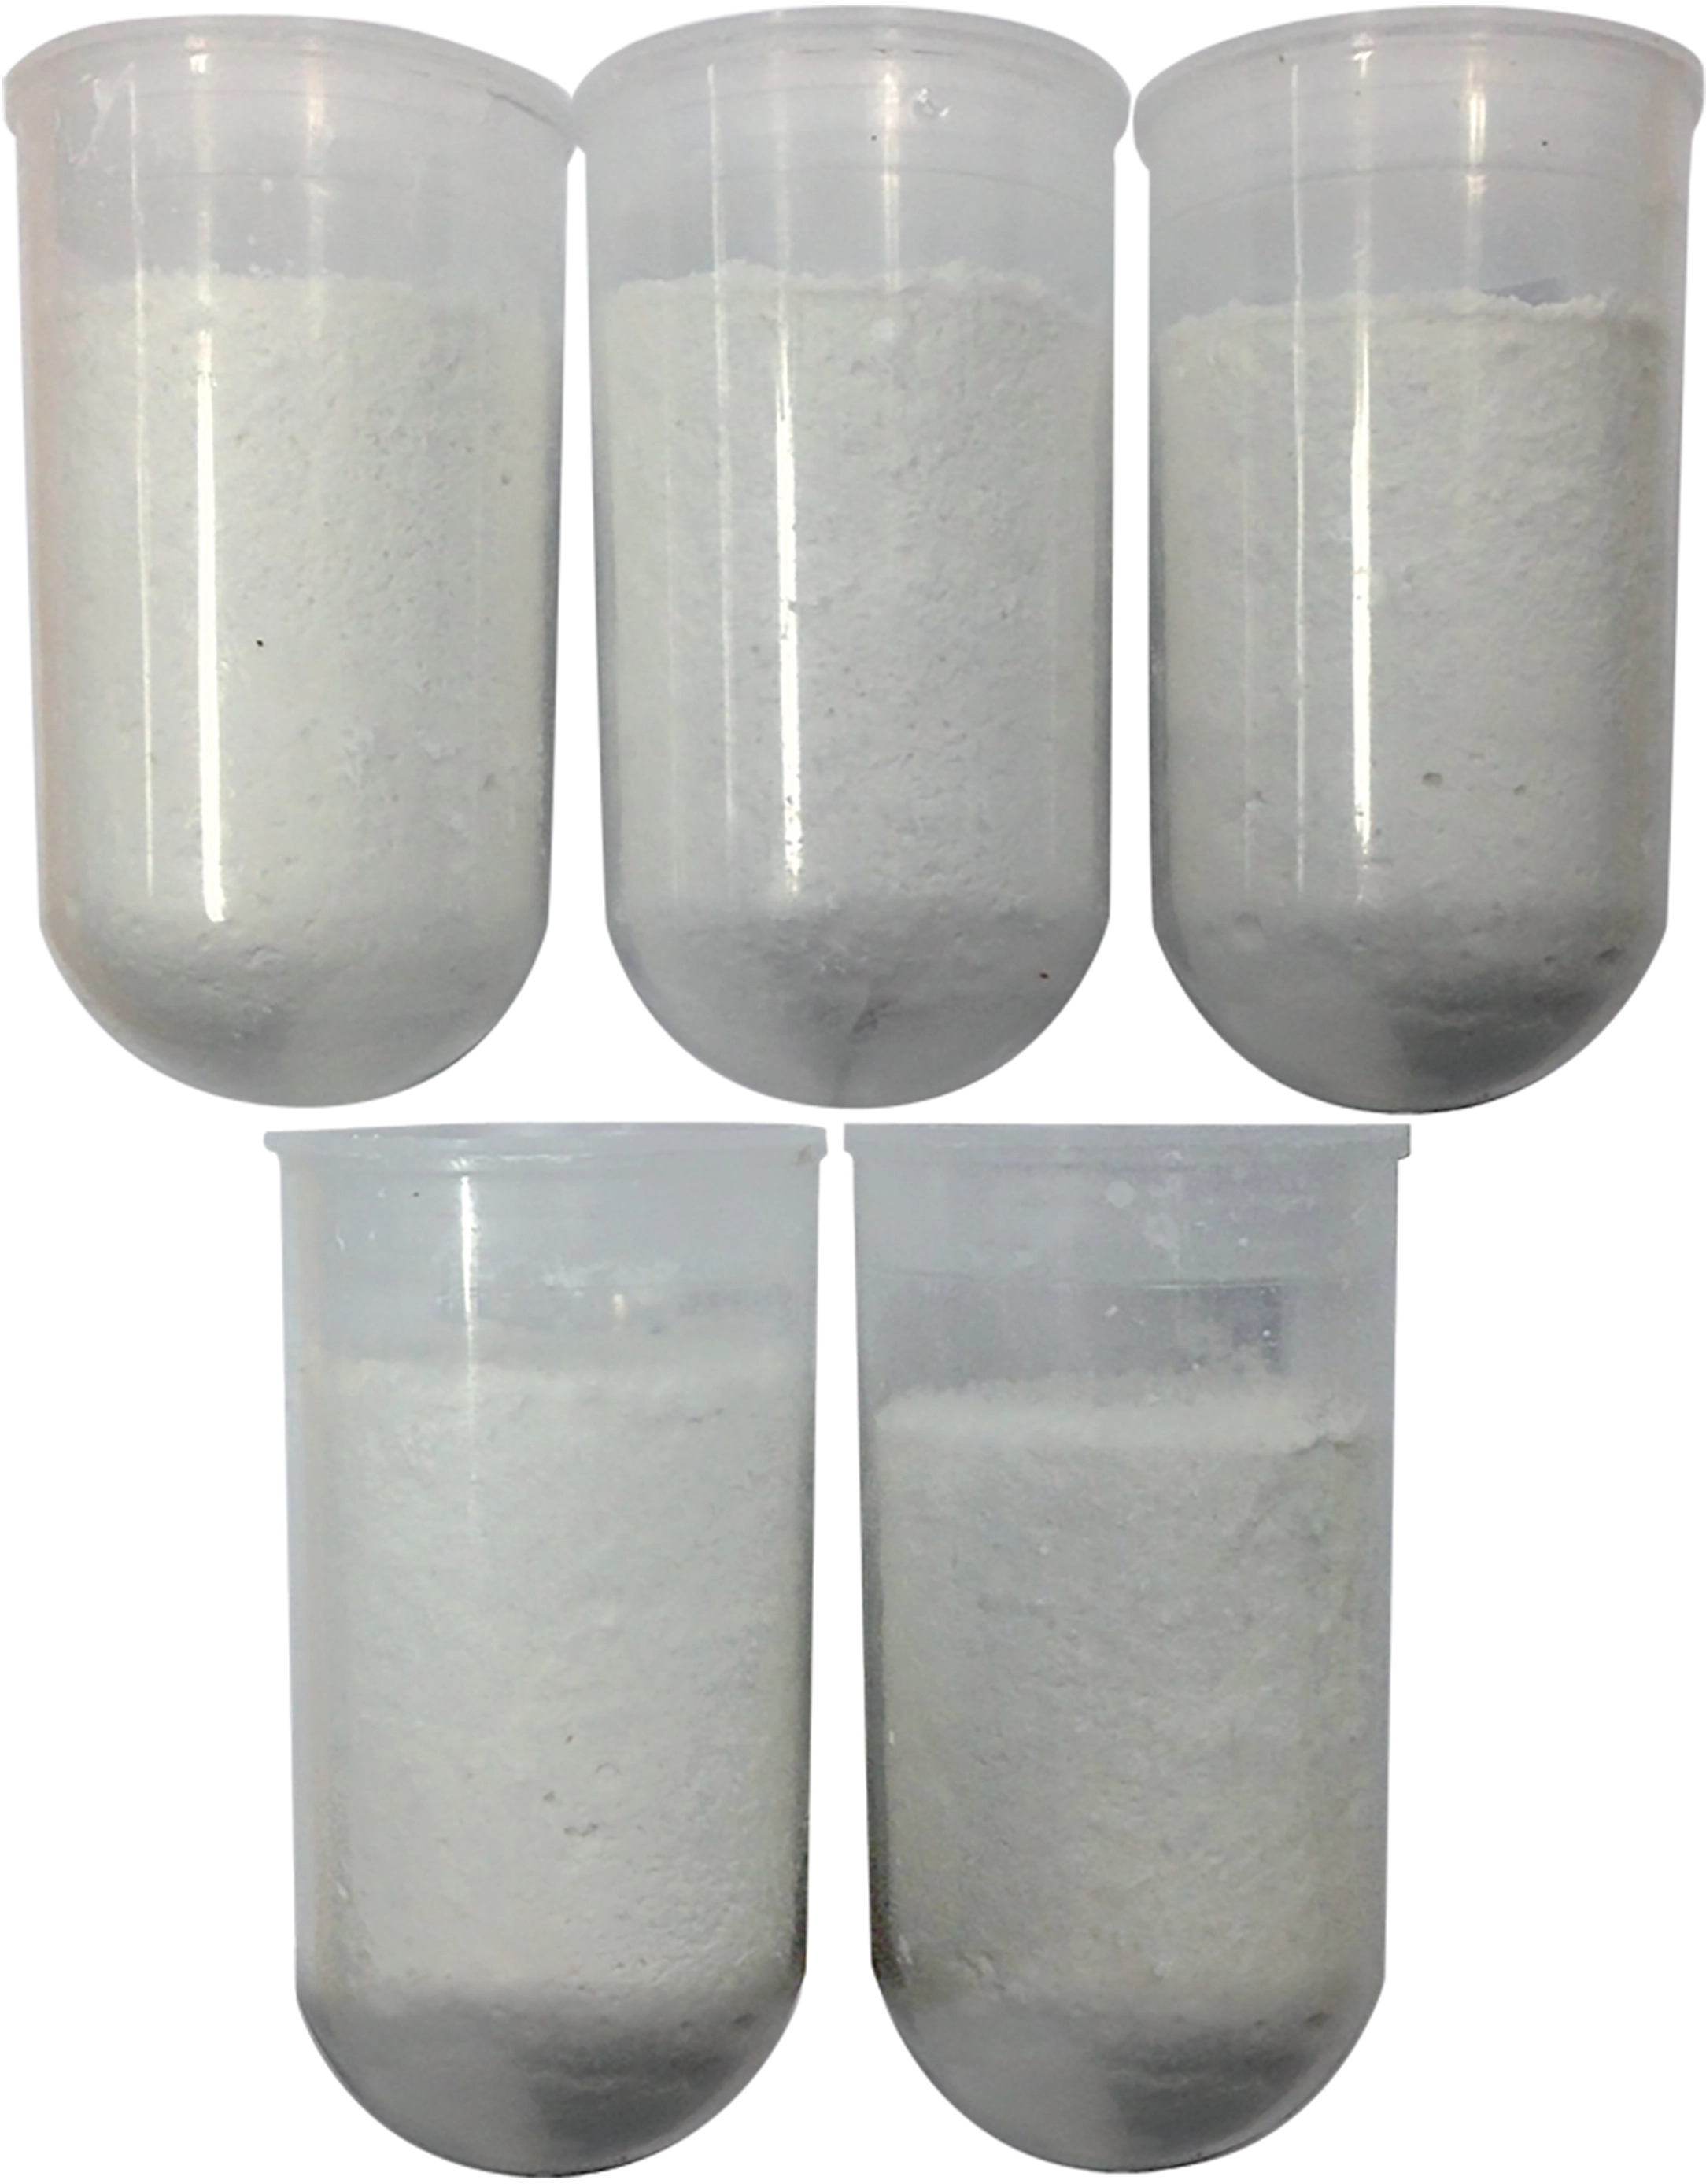 Dosatore polifosfati caldaia e ricarica per dosatore